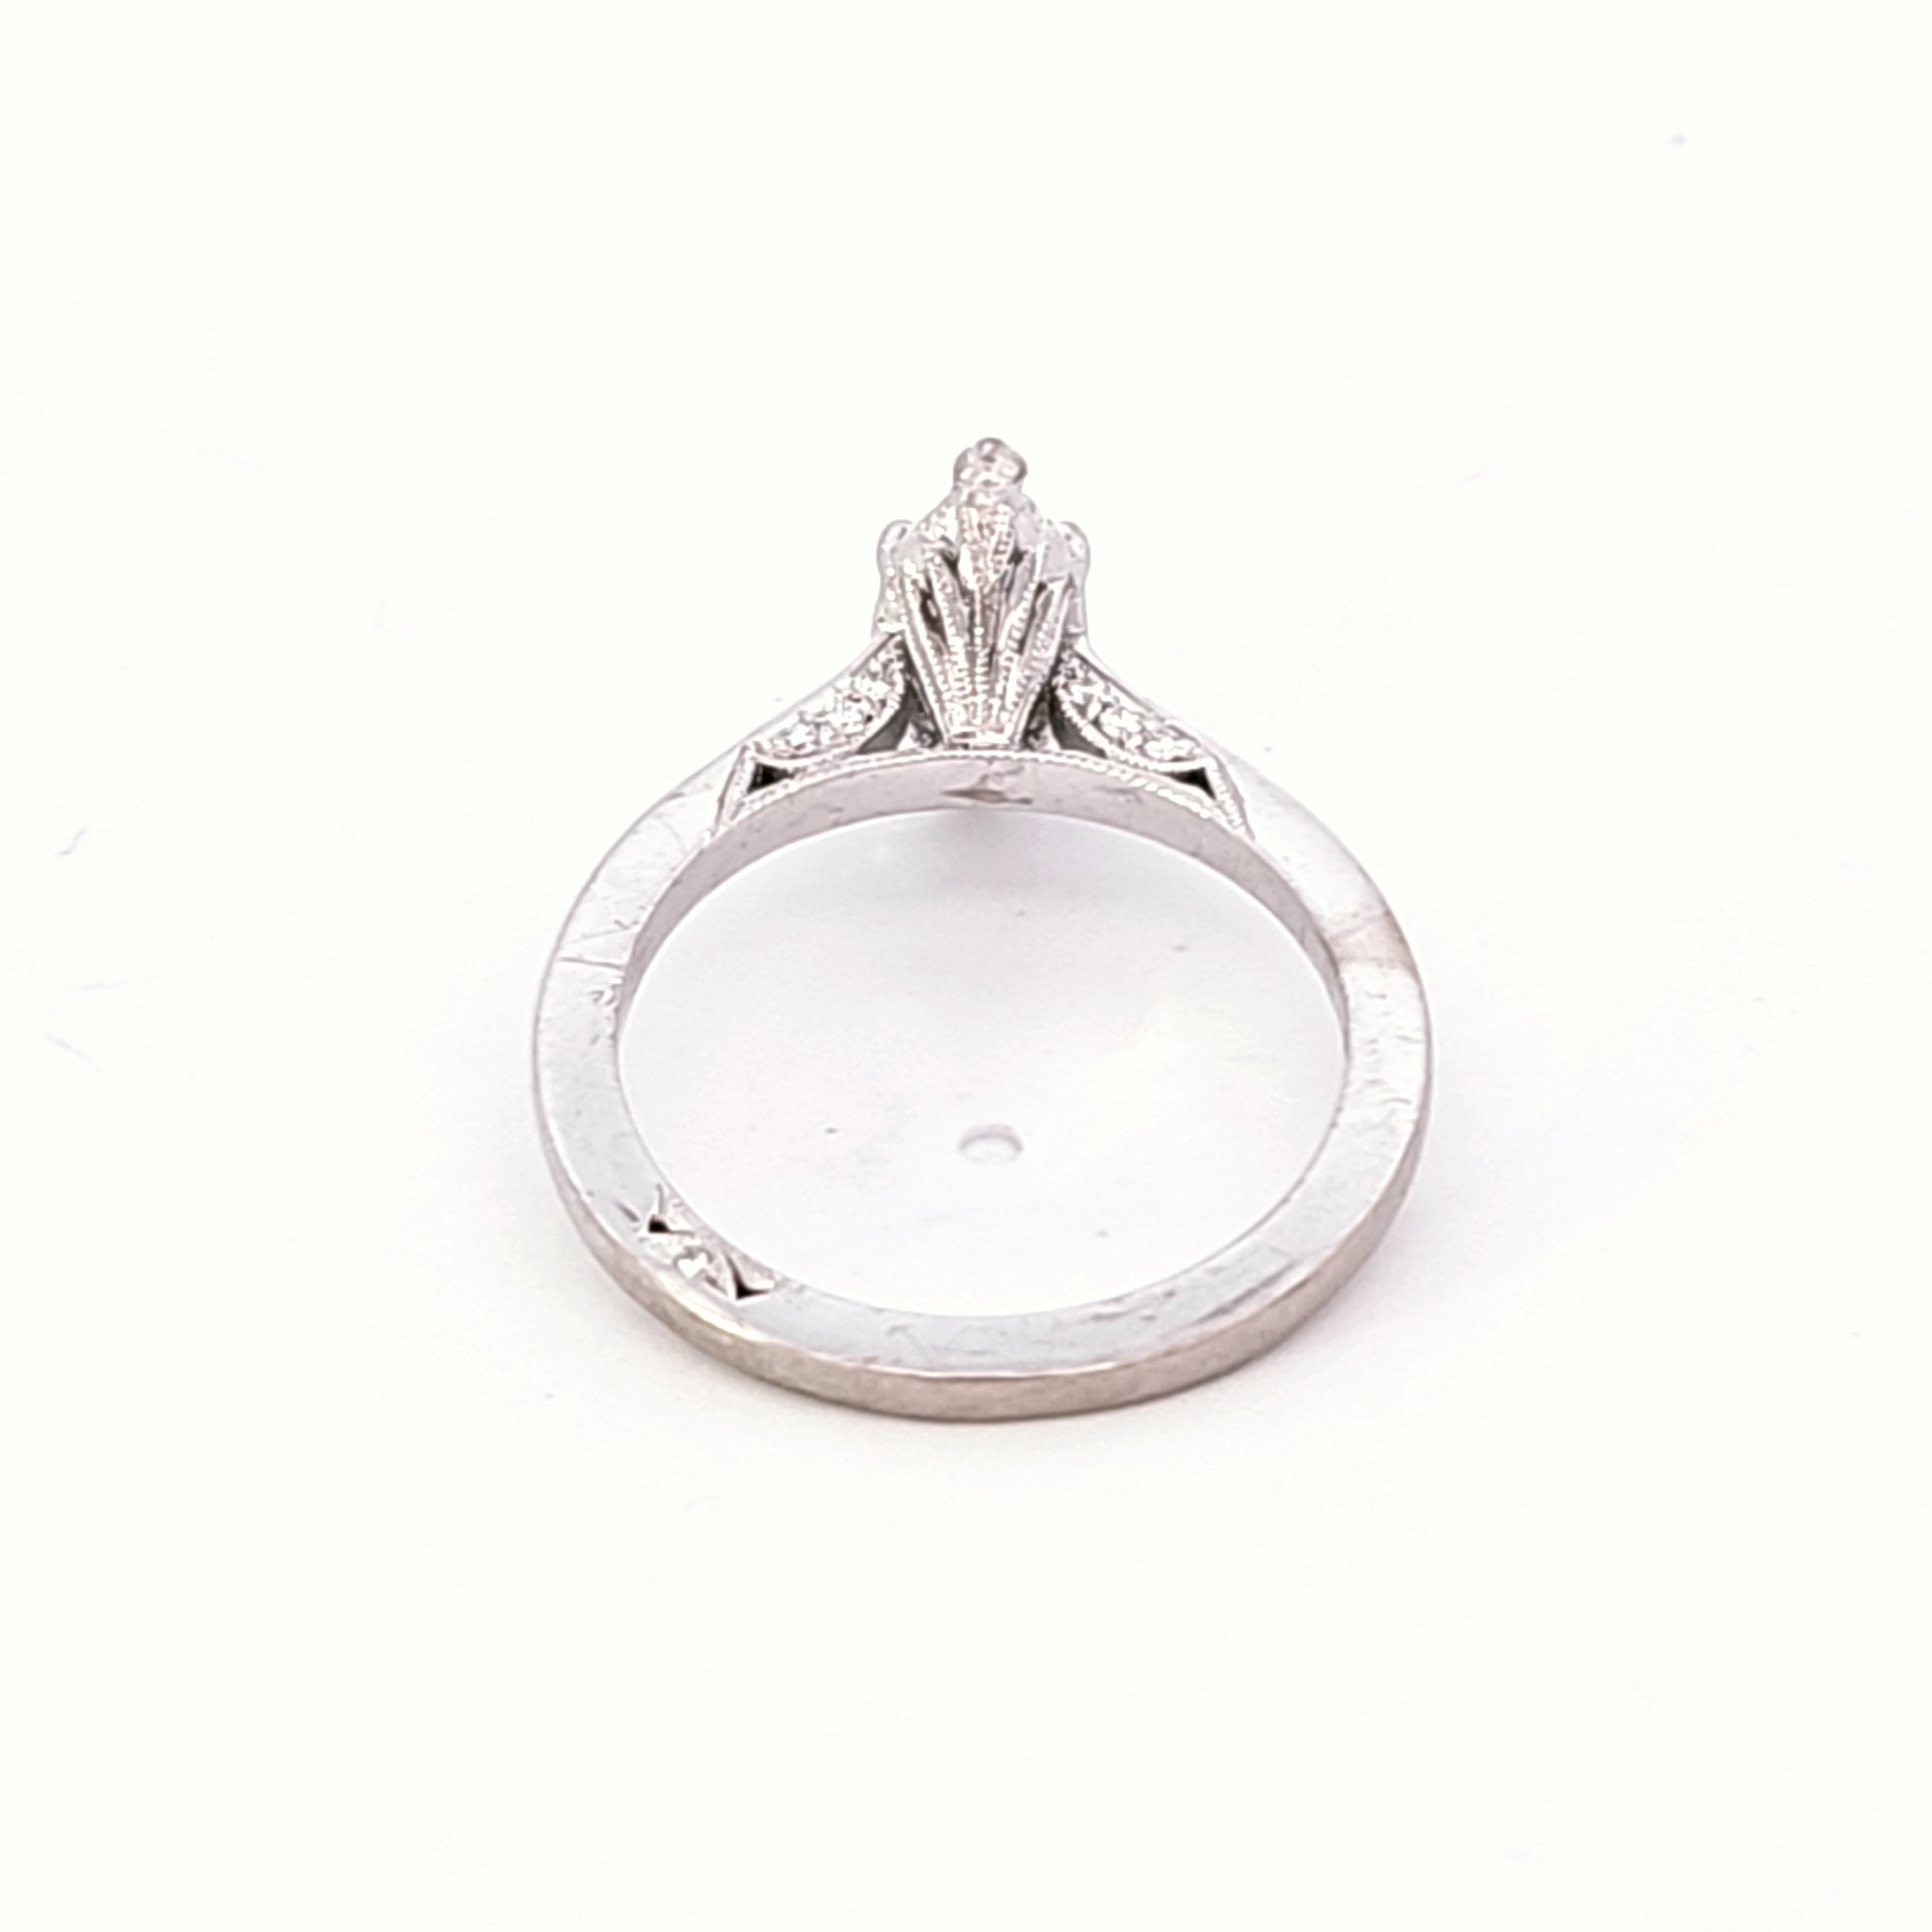 Tacori' Marquise Canadian Diamond Engagement Ring | 1.09ctw | SZ 6.5 |